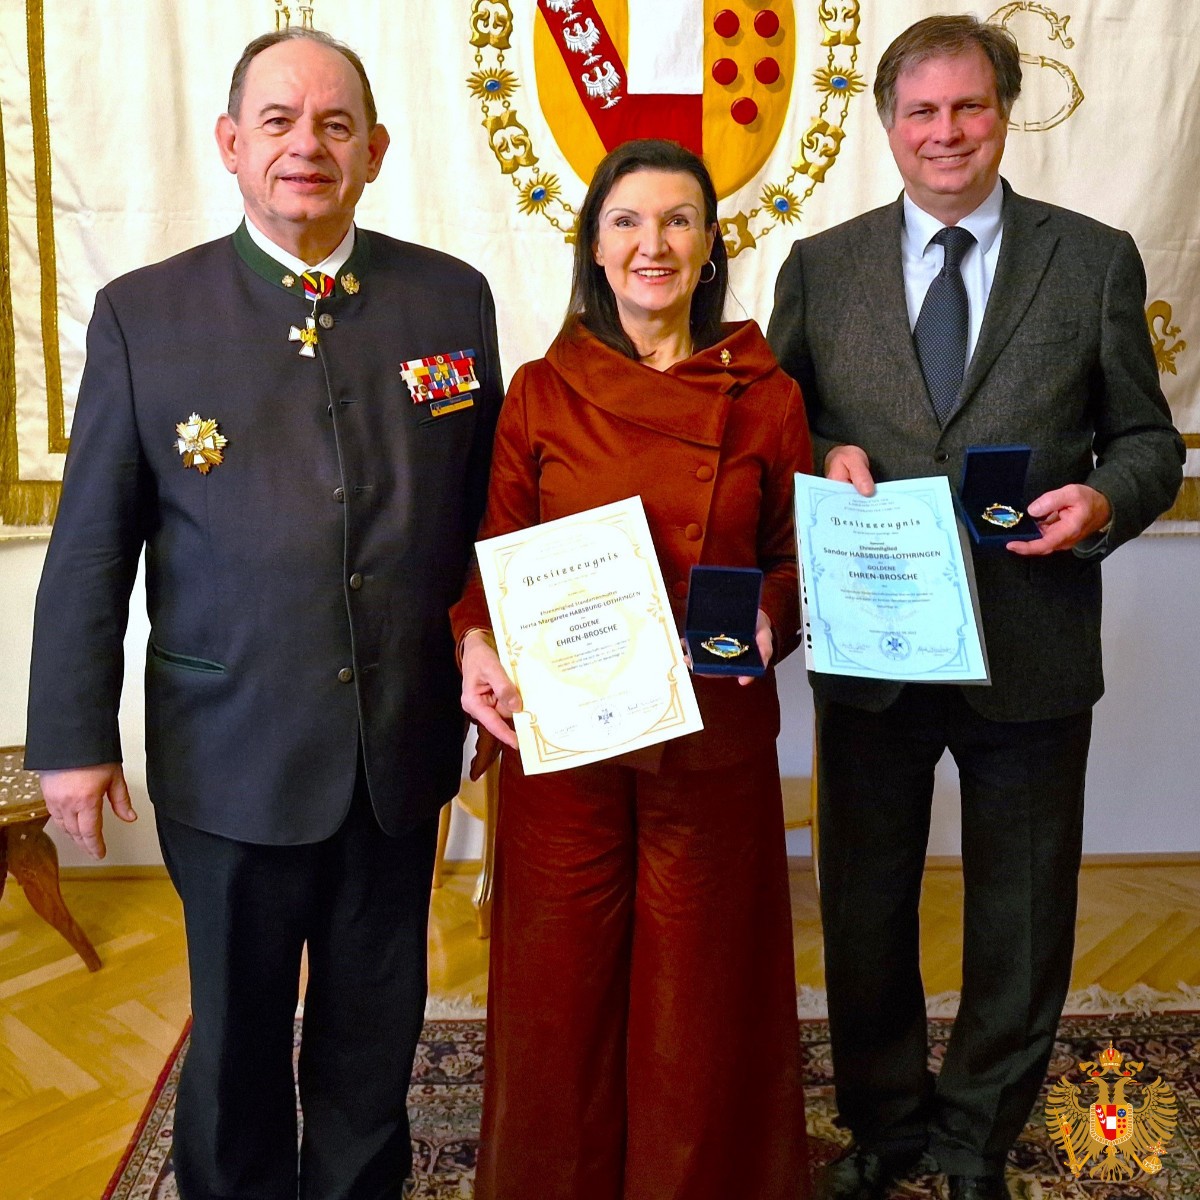 Awarding of the Golden Honor Brooch of the Hollabrunn Comradeship Association by Chairman Alfred Deimbacher.